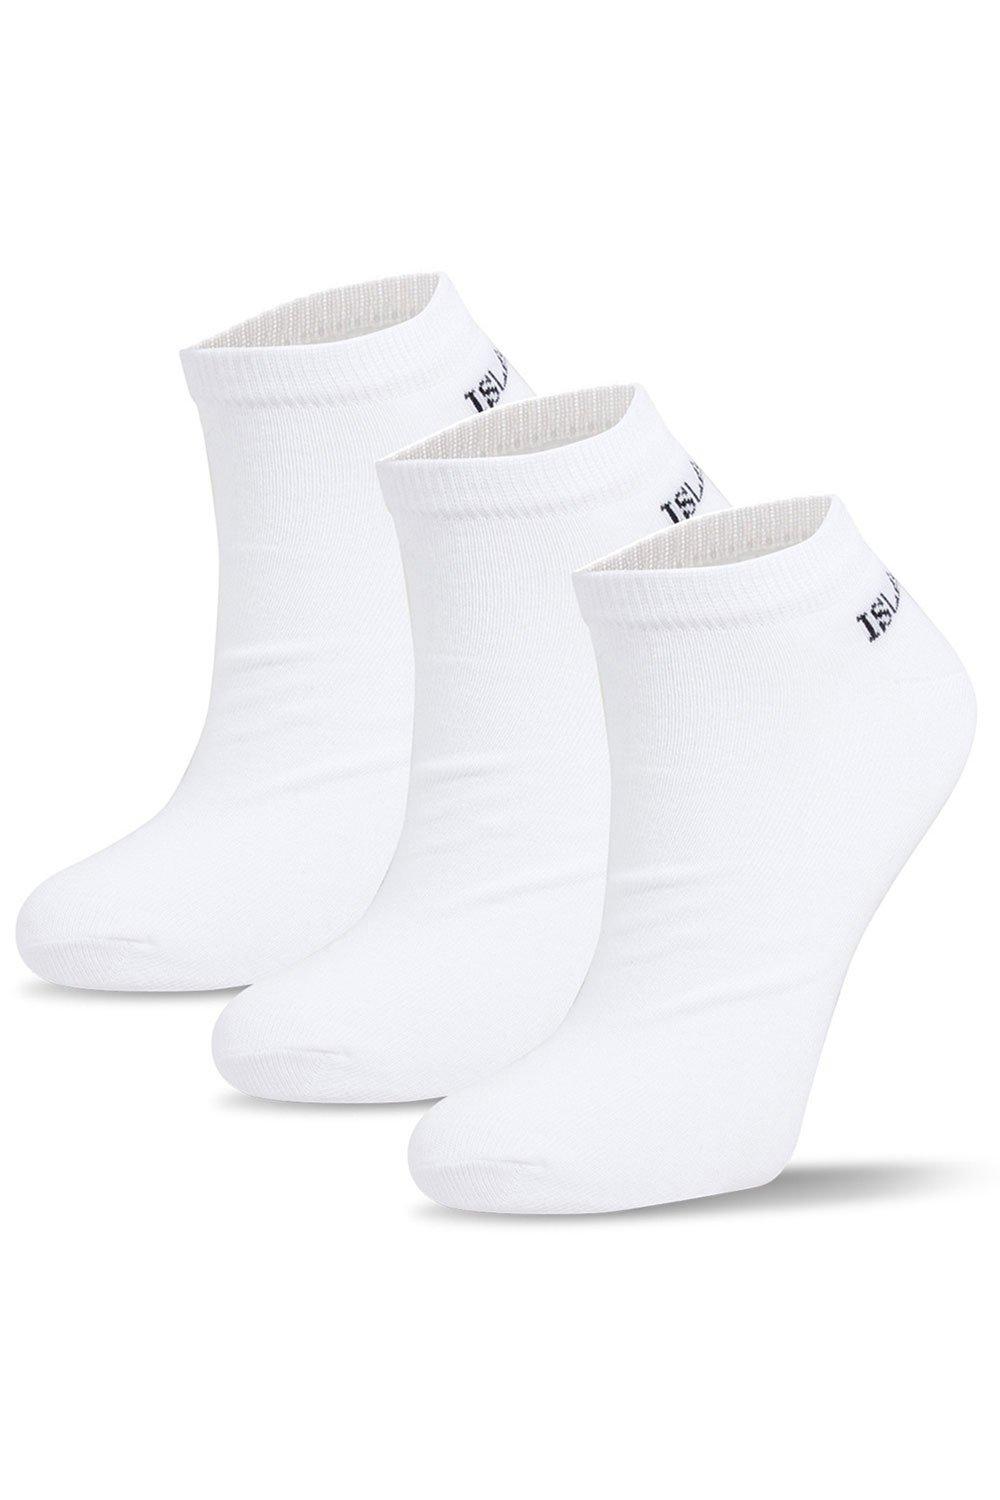 Performance Ankle Socks (3 Pairs)